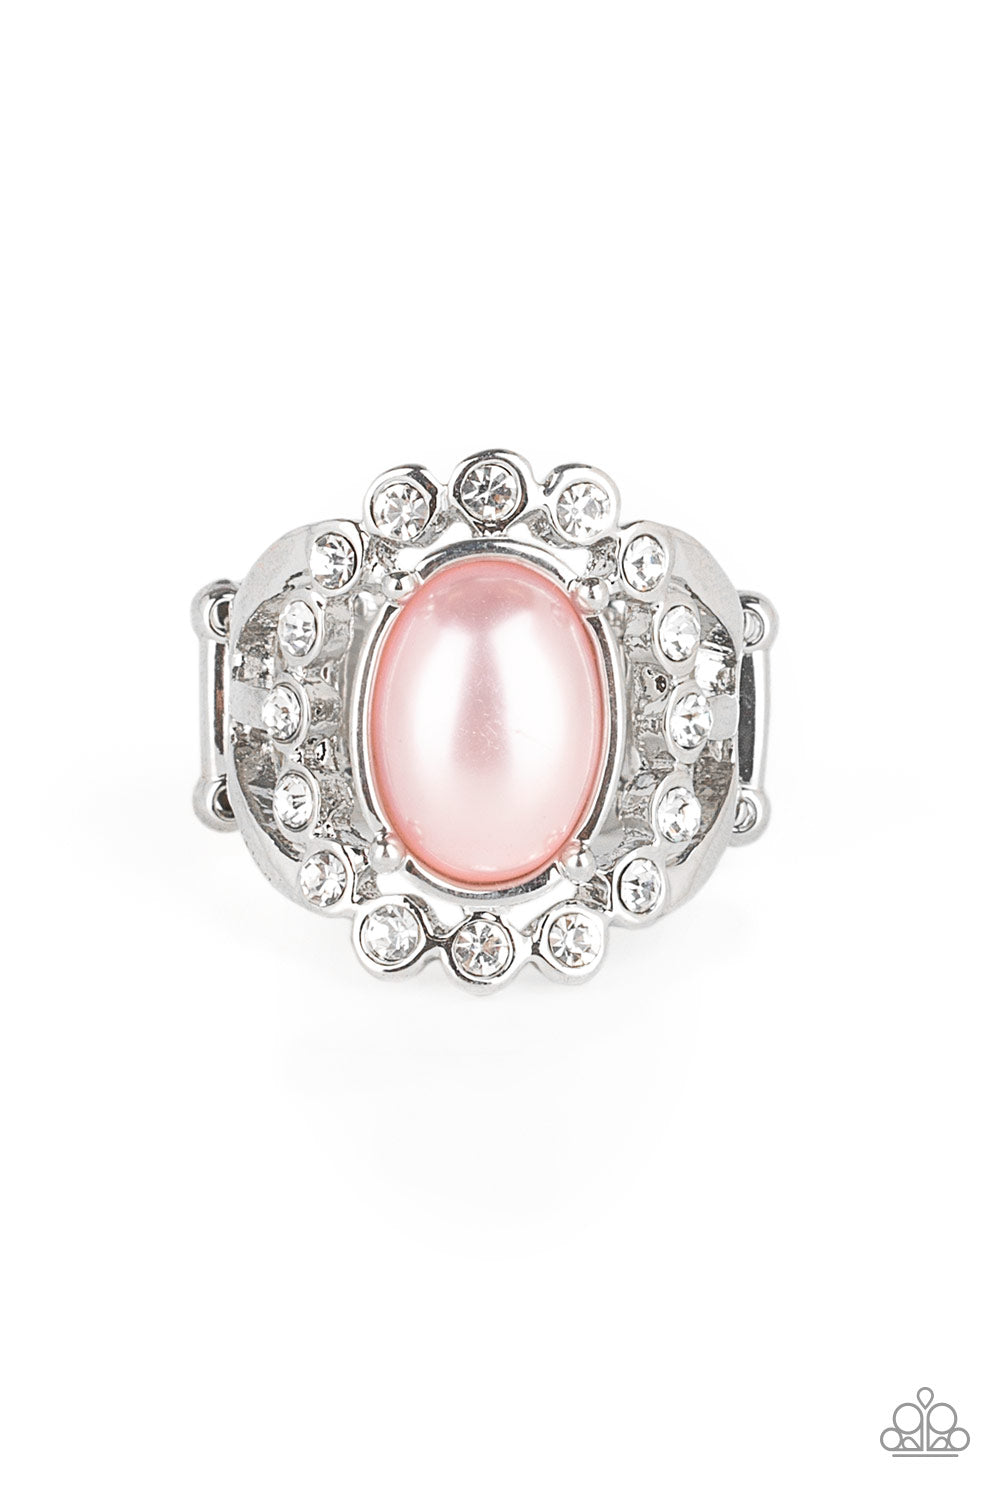 Sugar-Coated Splendor Pink Paparazzi Rings Cashmere Pink Jewels - Cashmere Pink Jewels & Accessories, Cashmere Pink Jewels & Accessories - Paparazzi